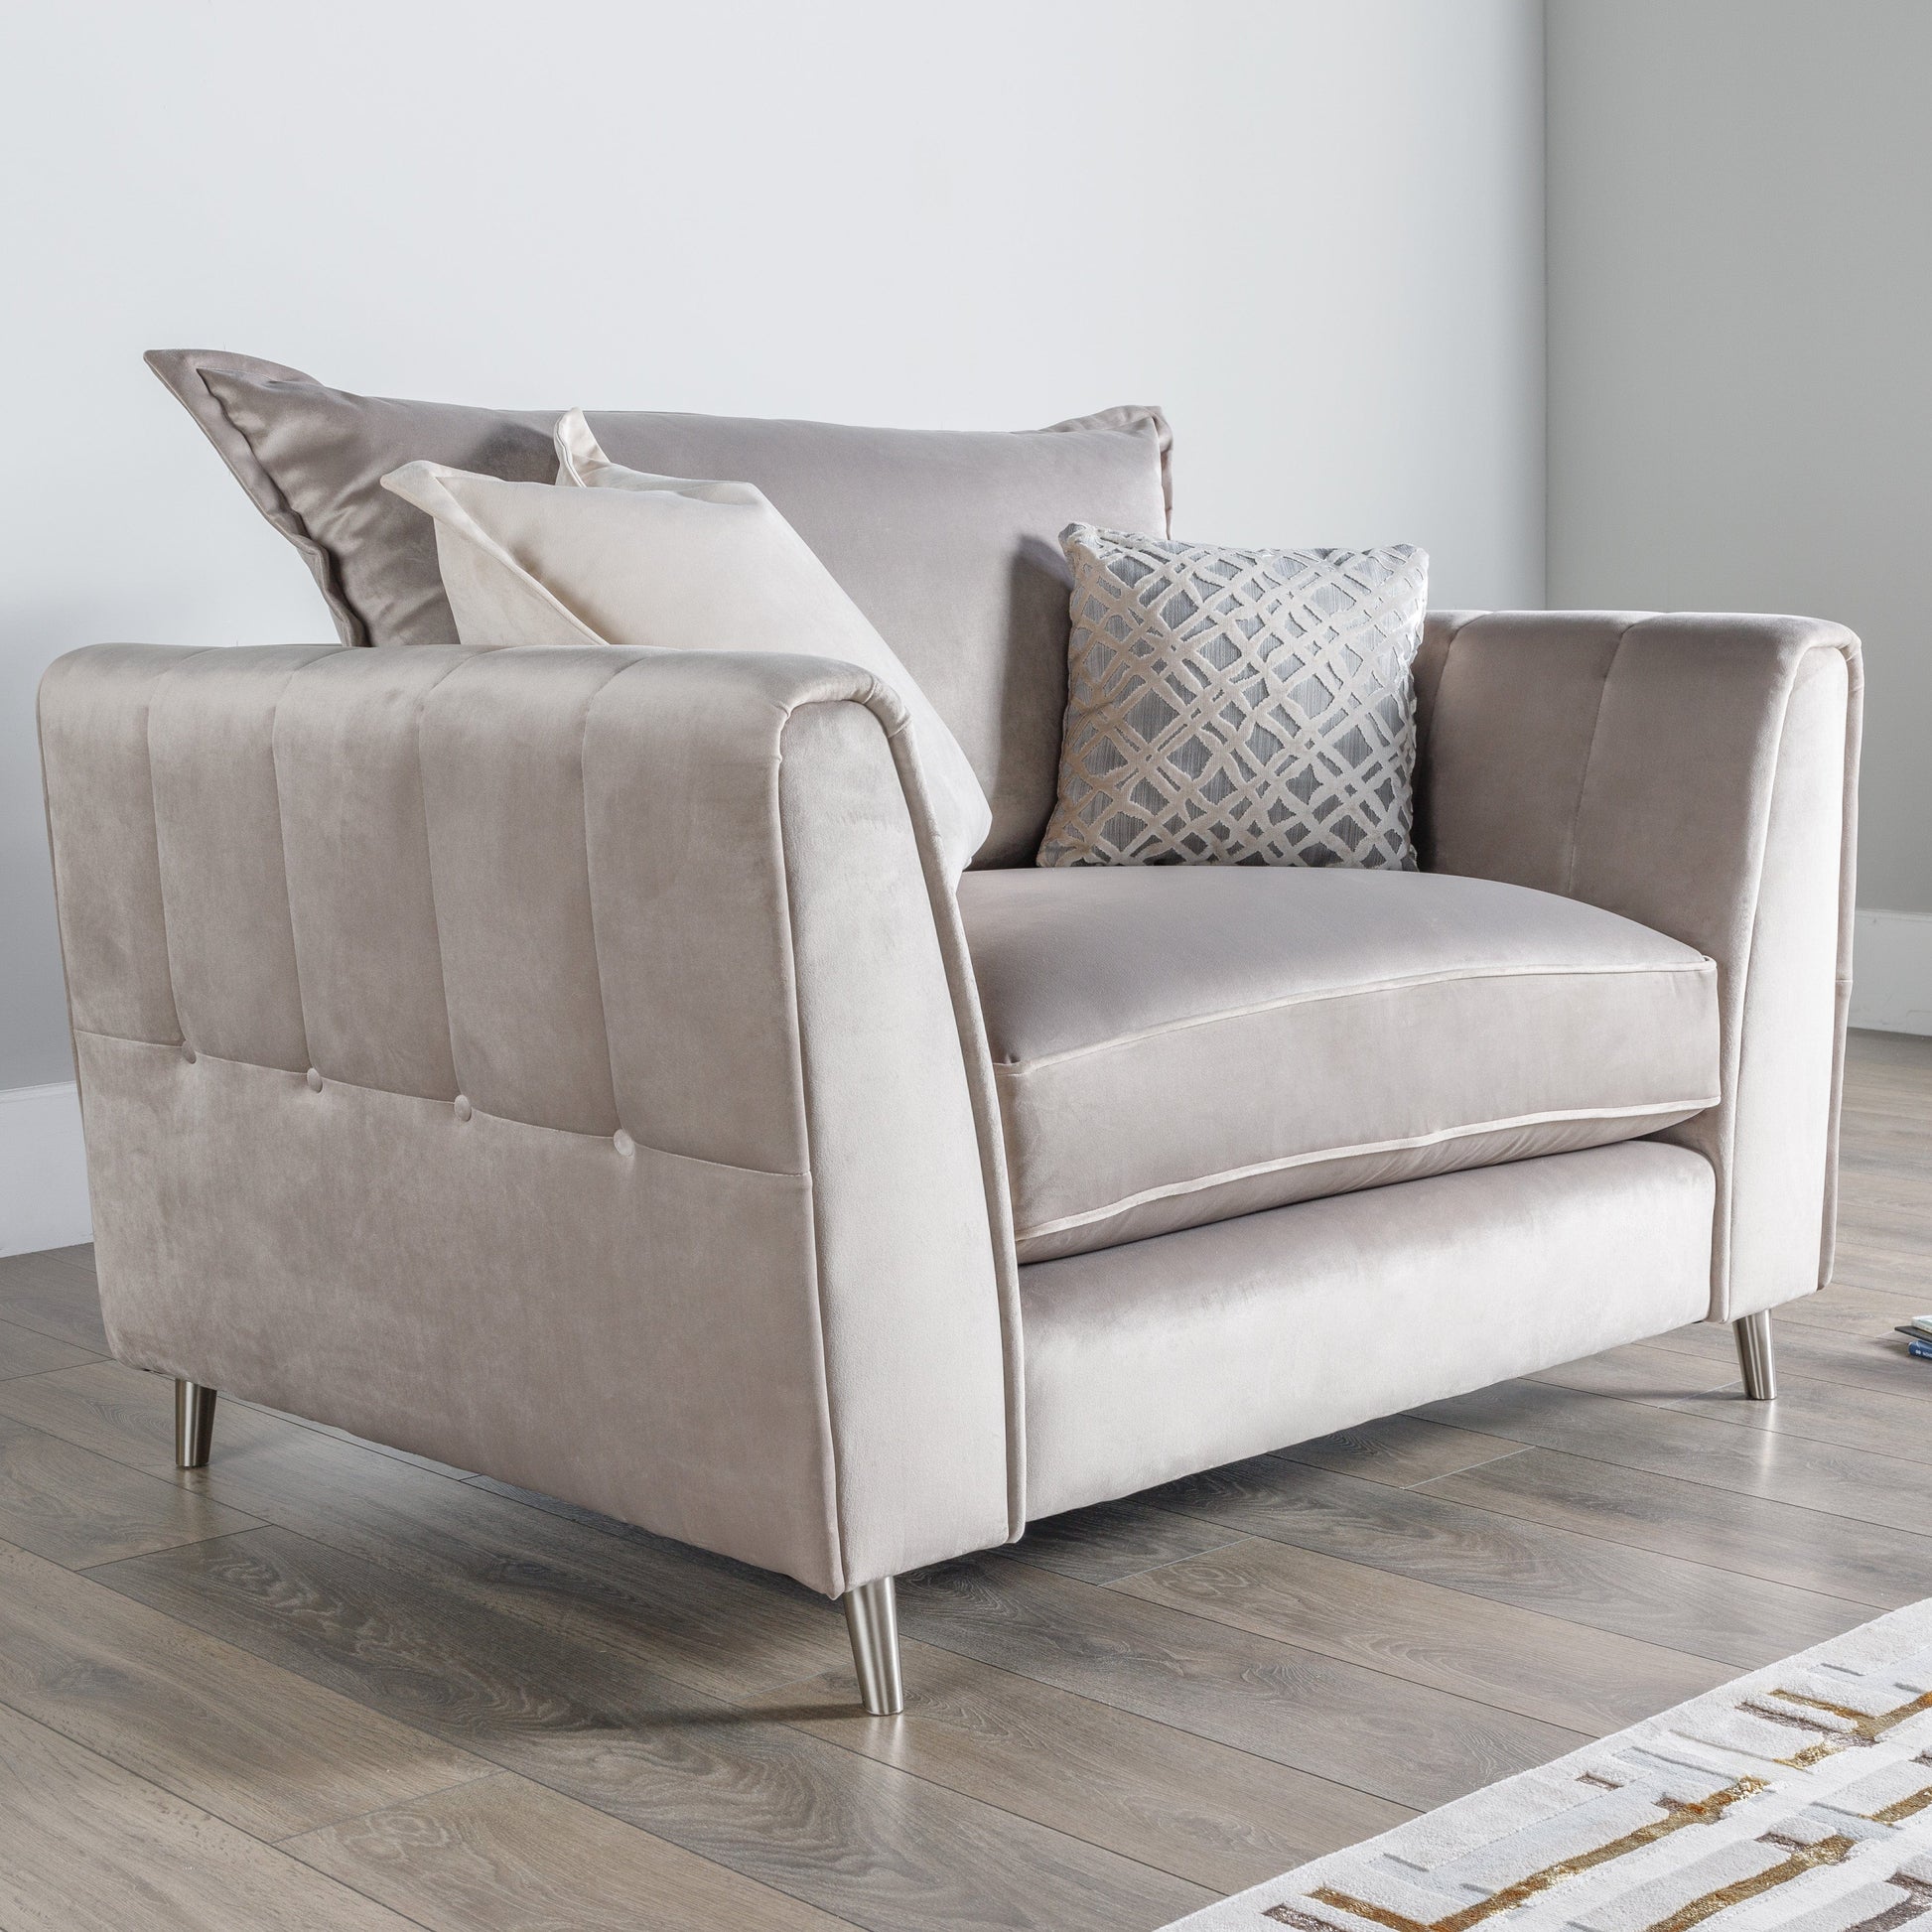 Furniture  -  Nice Snuggler Chair  -  60002825